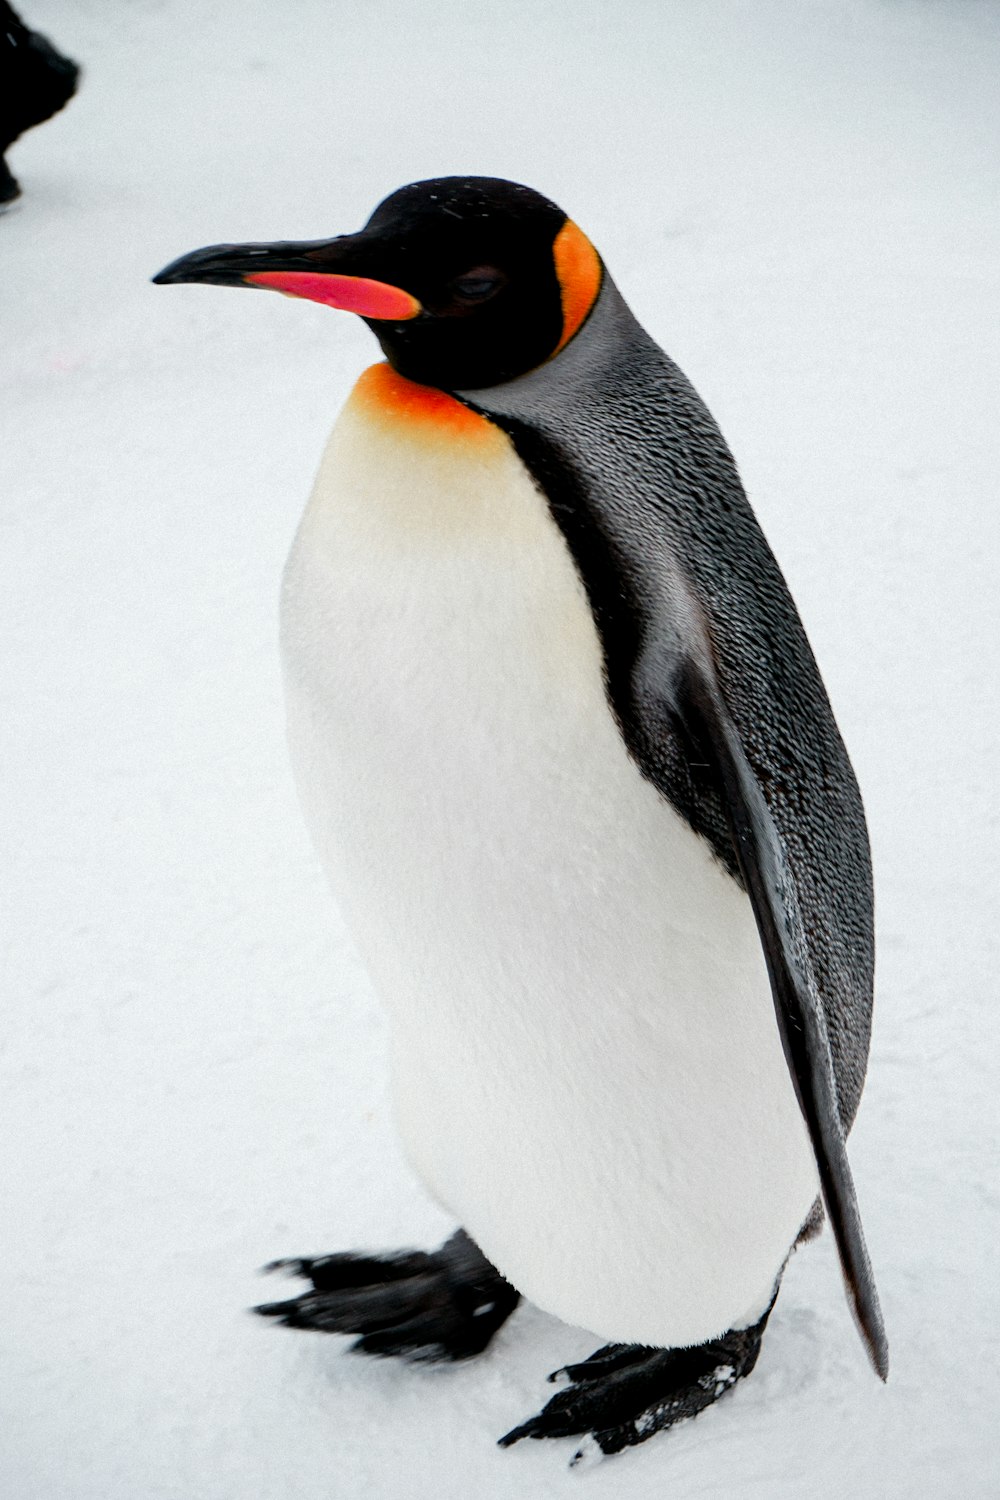 500 Best Penguin Pictures Hd Download Free Images On Unsplash